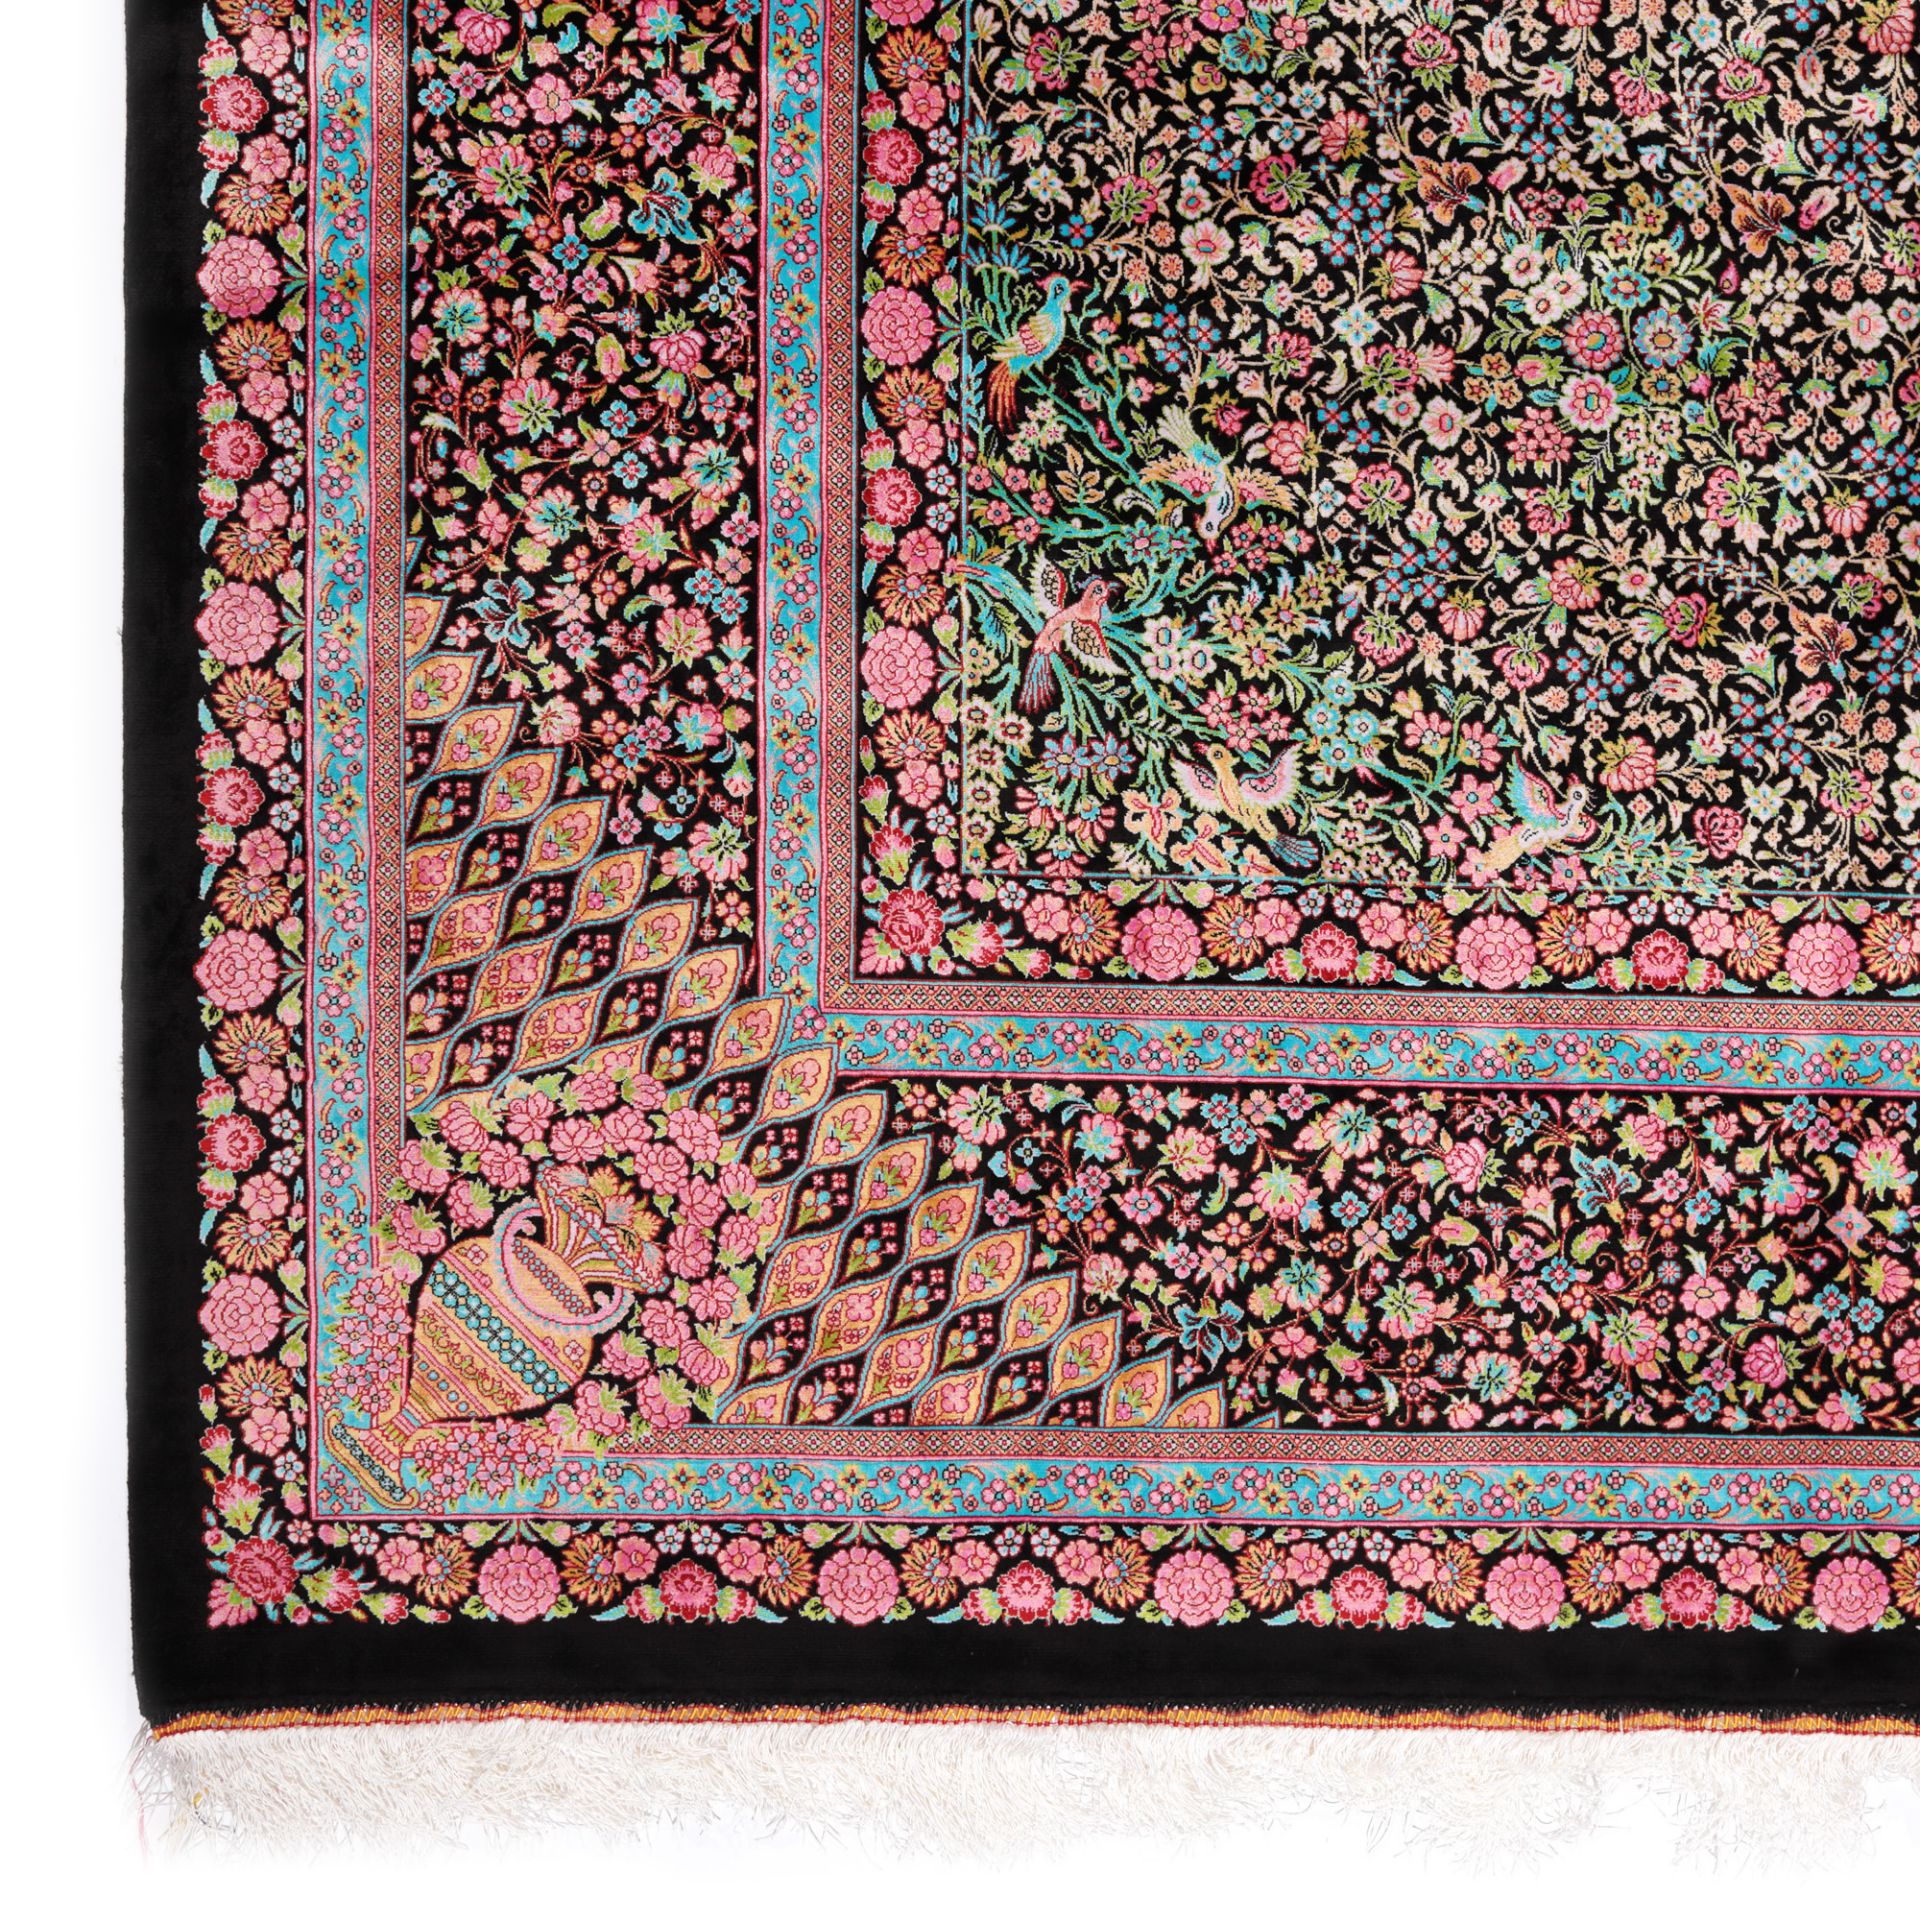 Qum silk rug, decorated with abundant floral motifs, Iran - Image 2 of 2